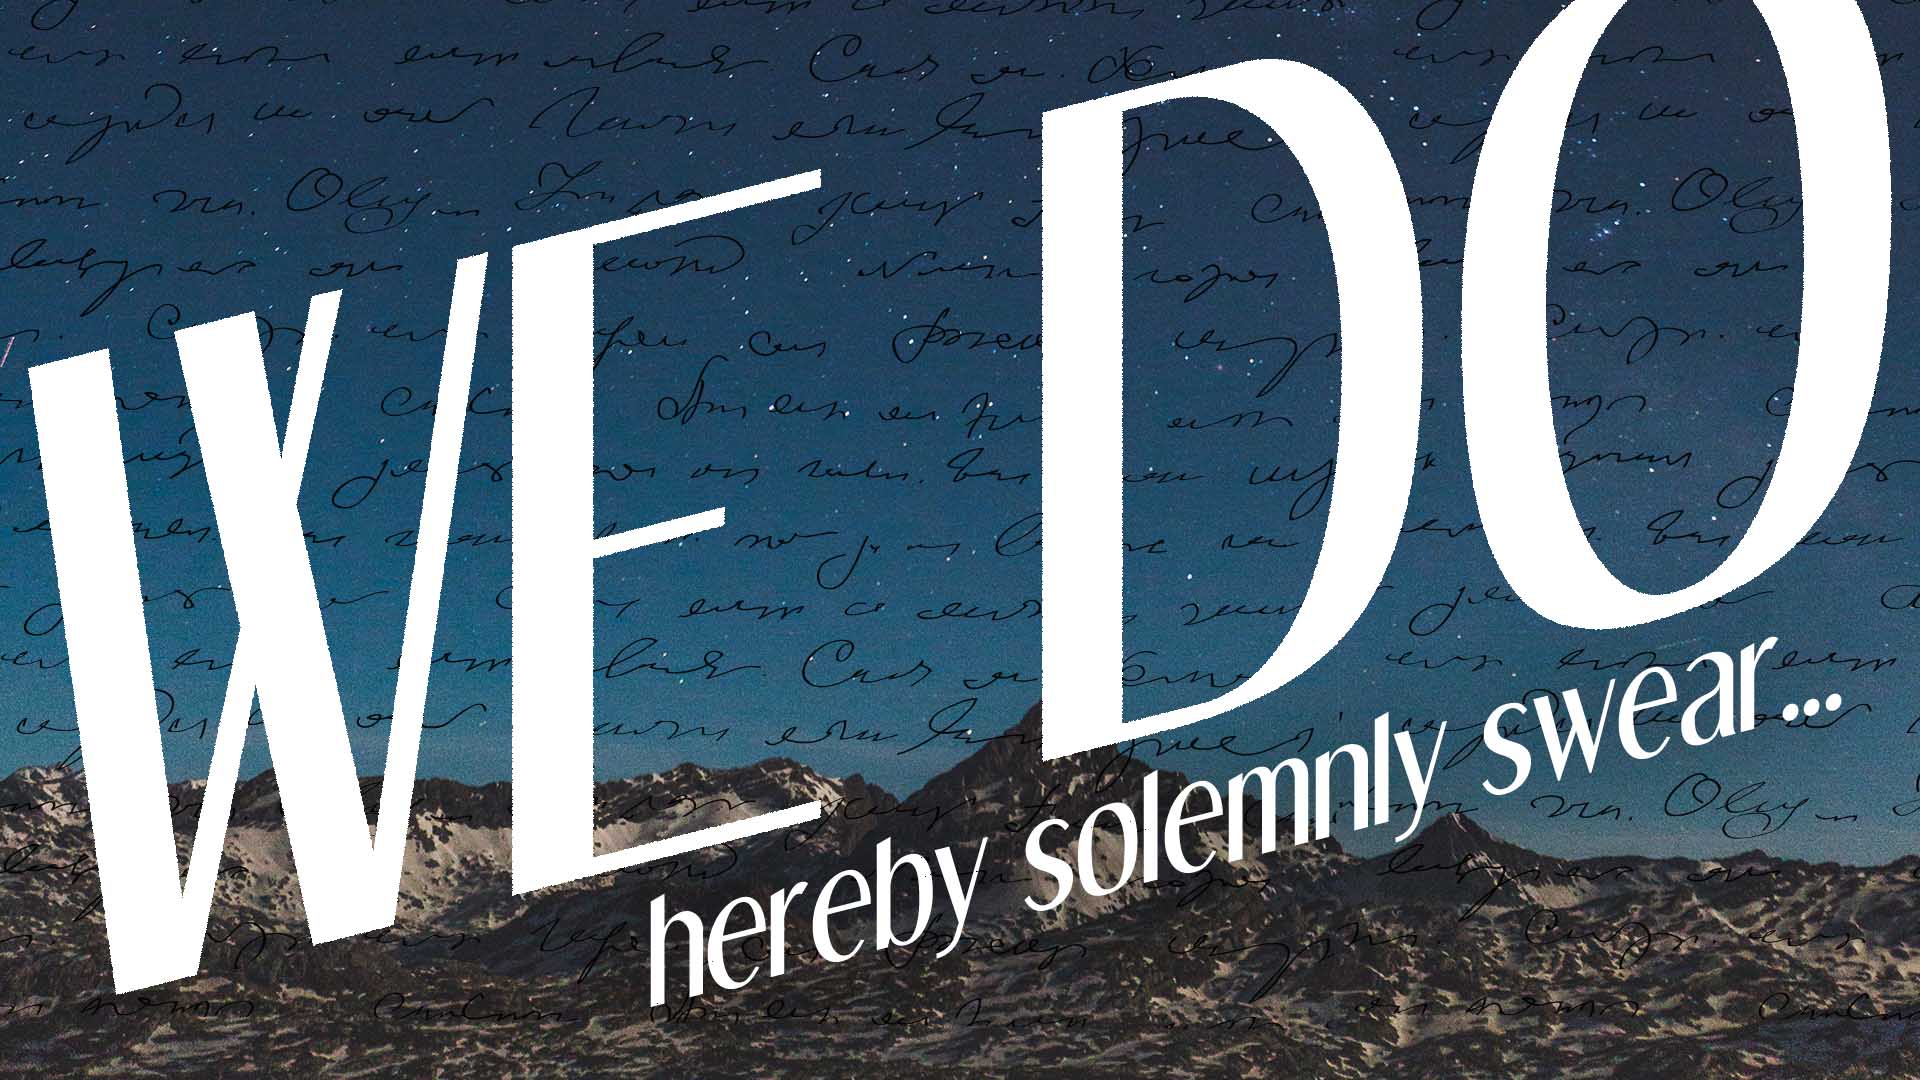 We Do Hereby Solemnly Swear…